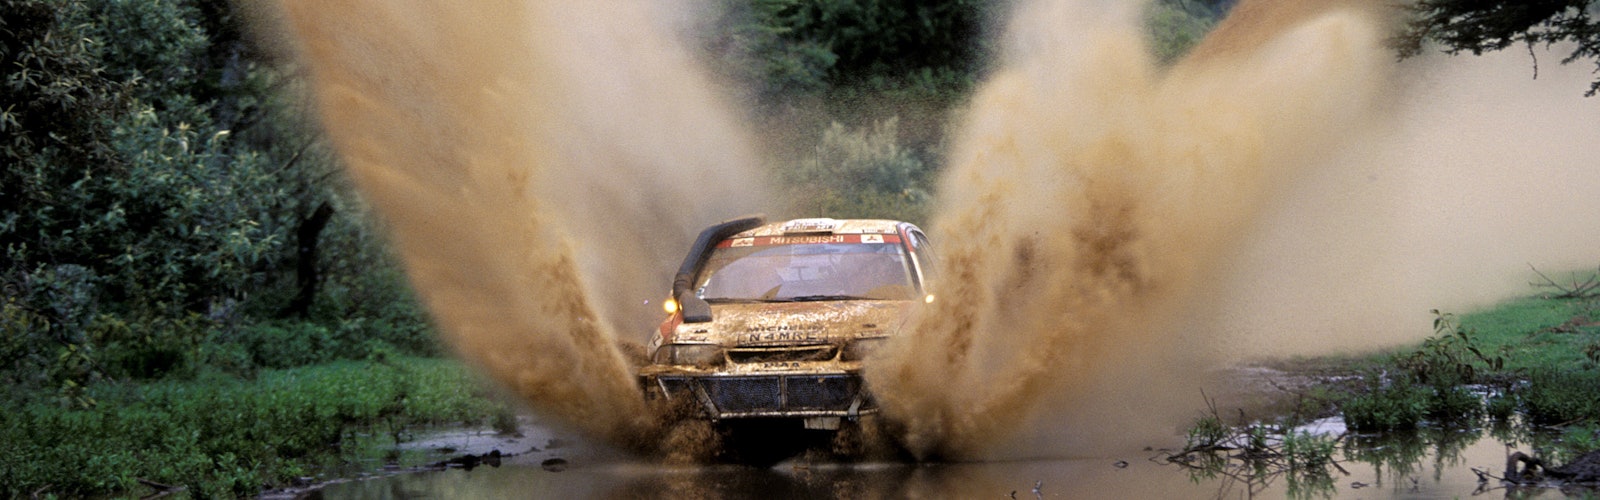 Tommi Makinen / Seppo Harjanne – Mistubishi Lancer Evo III – 1996 WRC Safari Rally